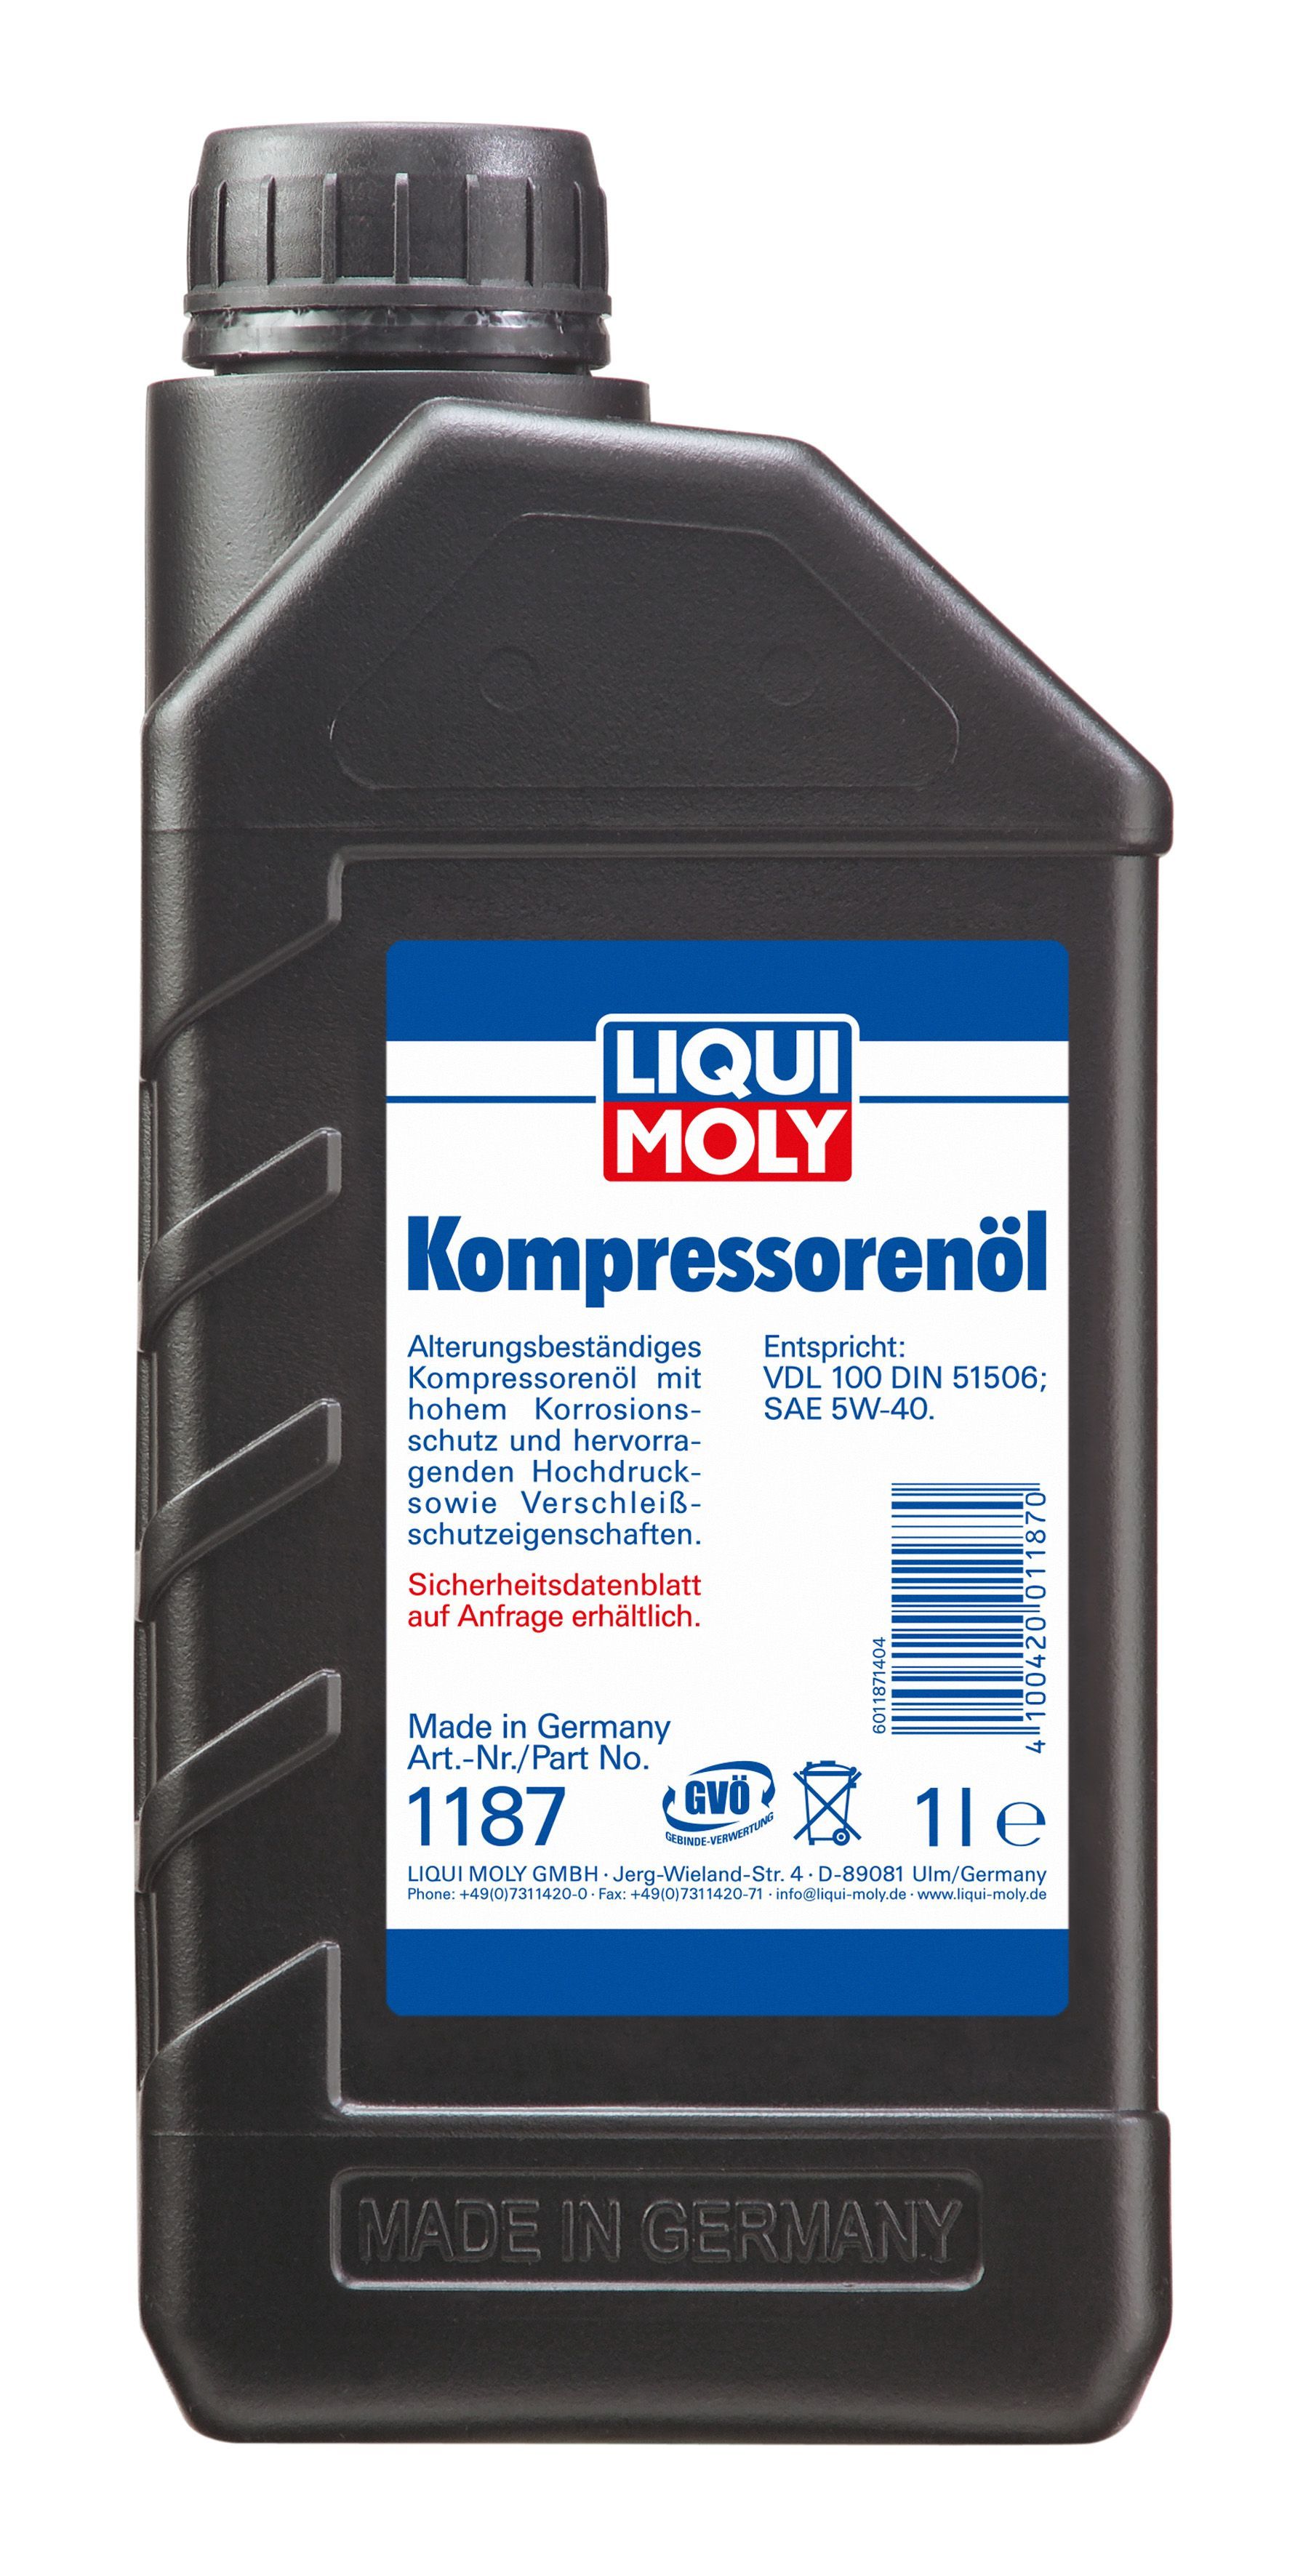 LM Kompressorenoil компрессорное синтетическое масло (1L)